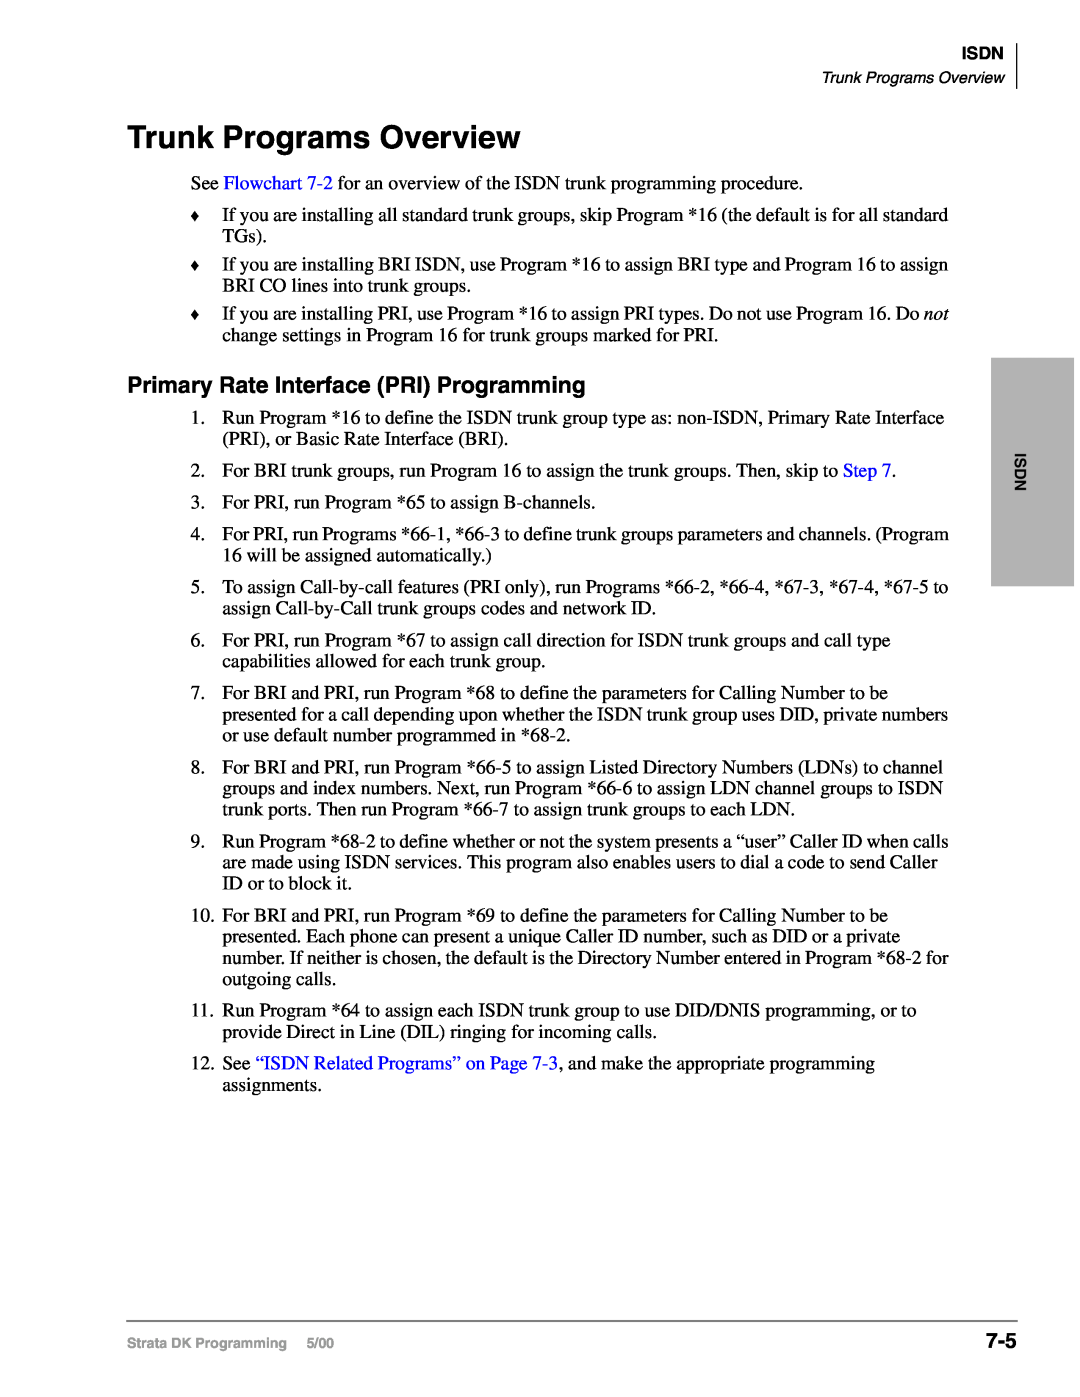 Toshiba dk14, DK40I, DK424I manual Trunk Programs Overview, Primary Rate Interface PRI Programming 